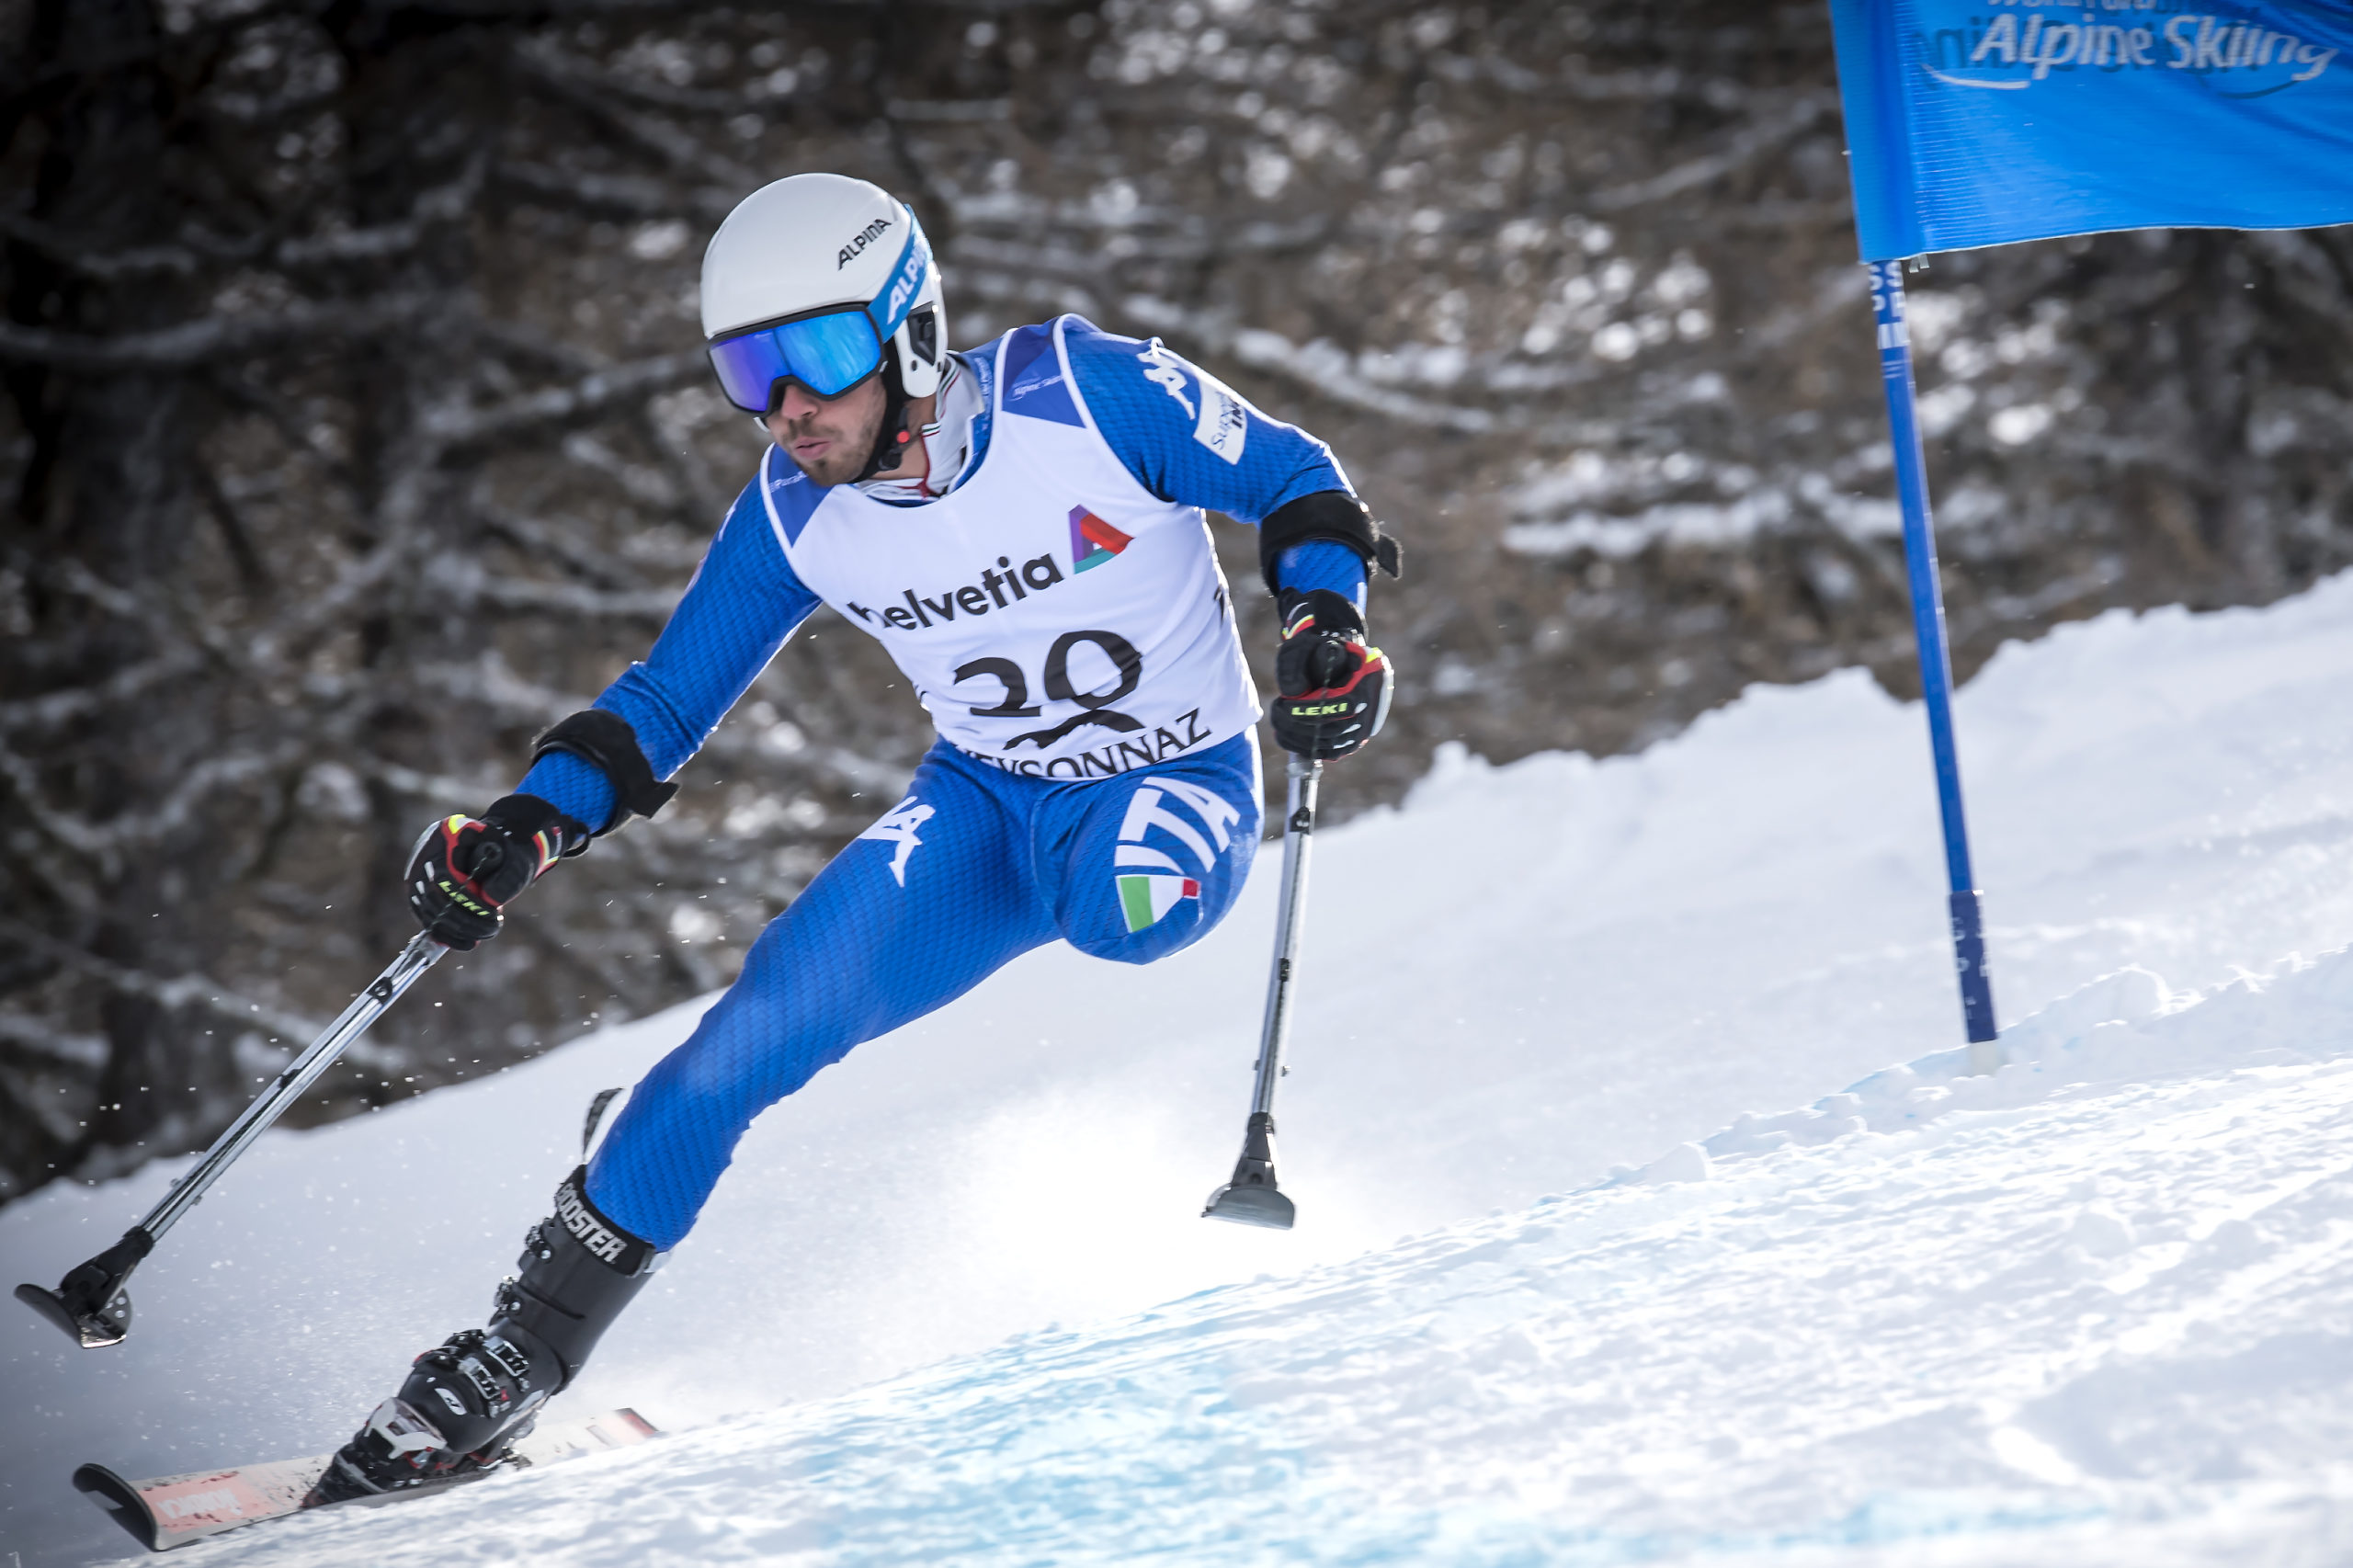 08.02.2019; Veysonnaz (Vs). World Para Alpine Skiing; Coupe du monde de Handi Ski. Slalom Geant; Davide BENDOTTI  ( ITA)
photo Jean-Guy Python